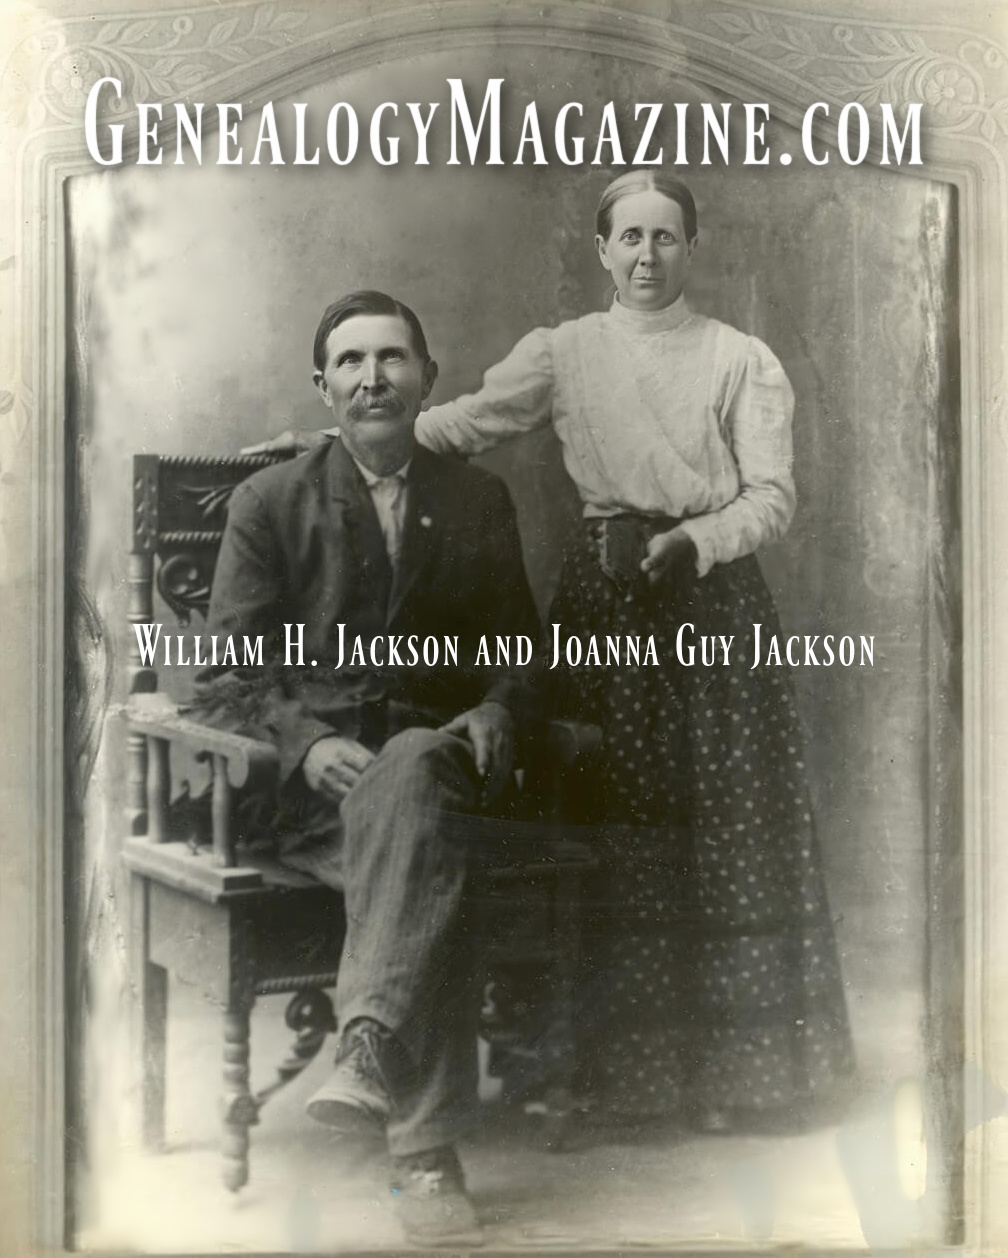 William H. Jackson and Joanna Guy Jackson